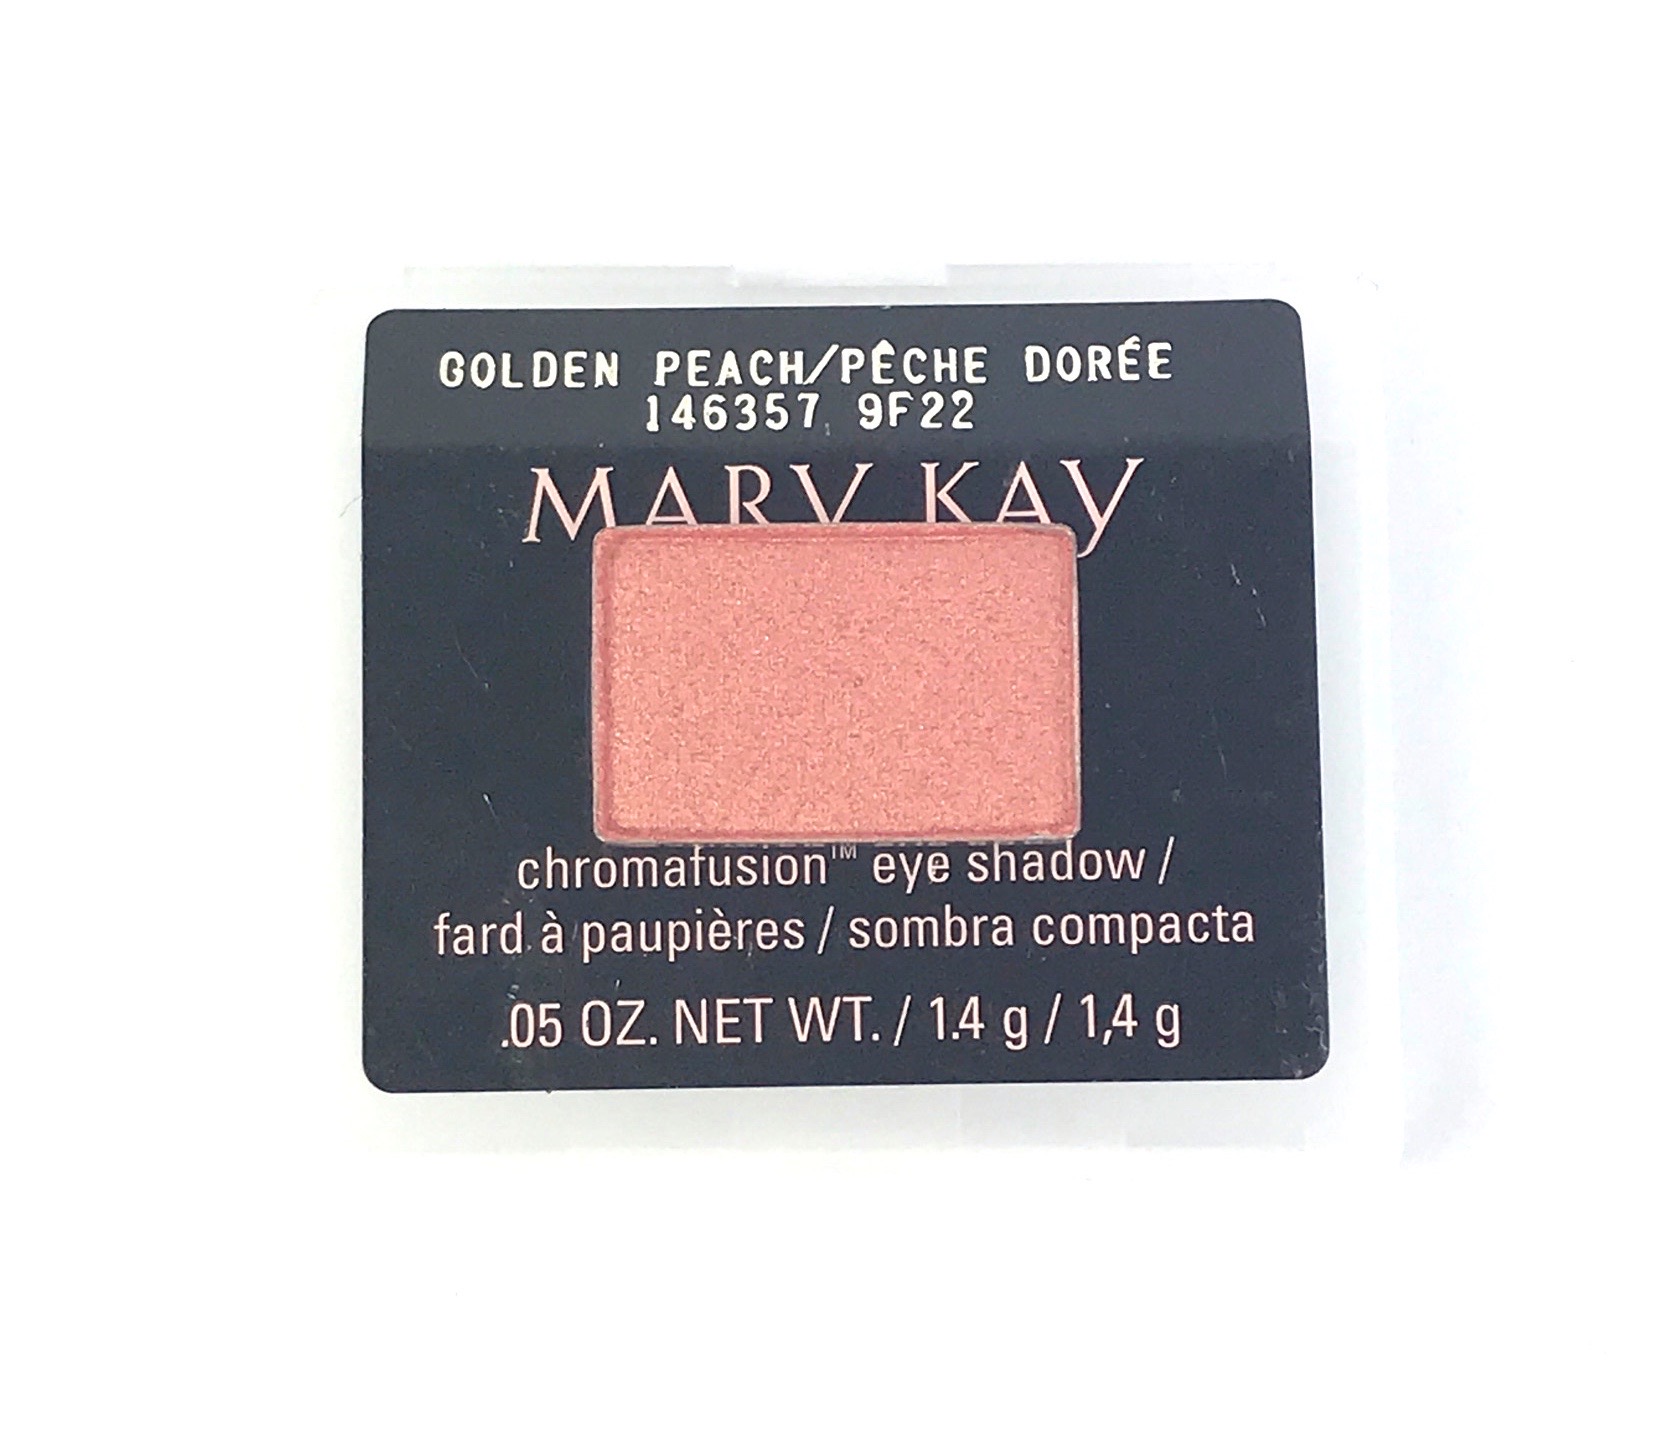 Mary Kay Peach Lip Makeup